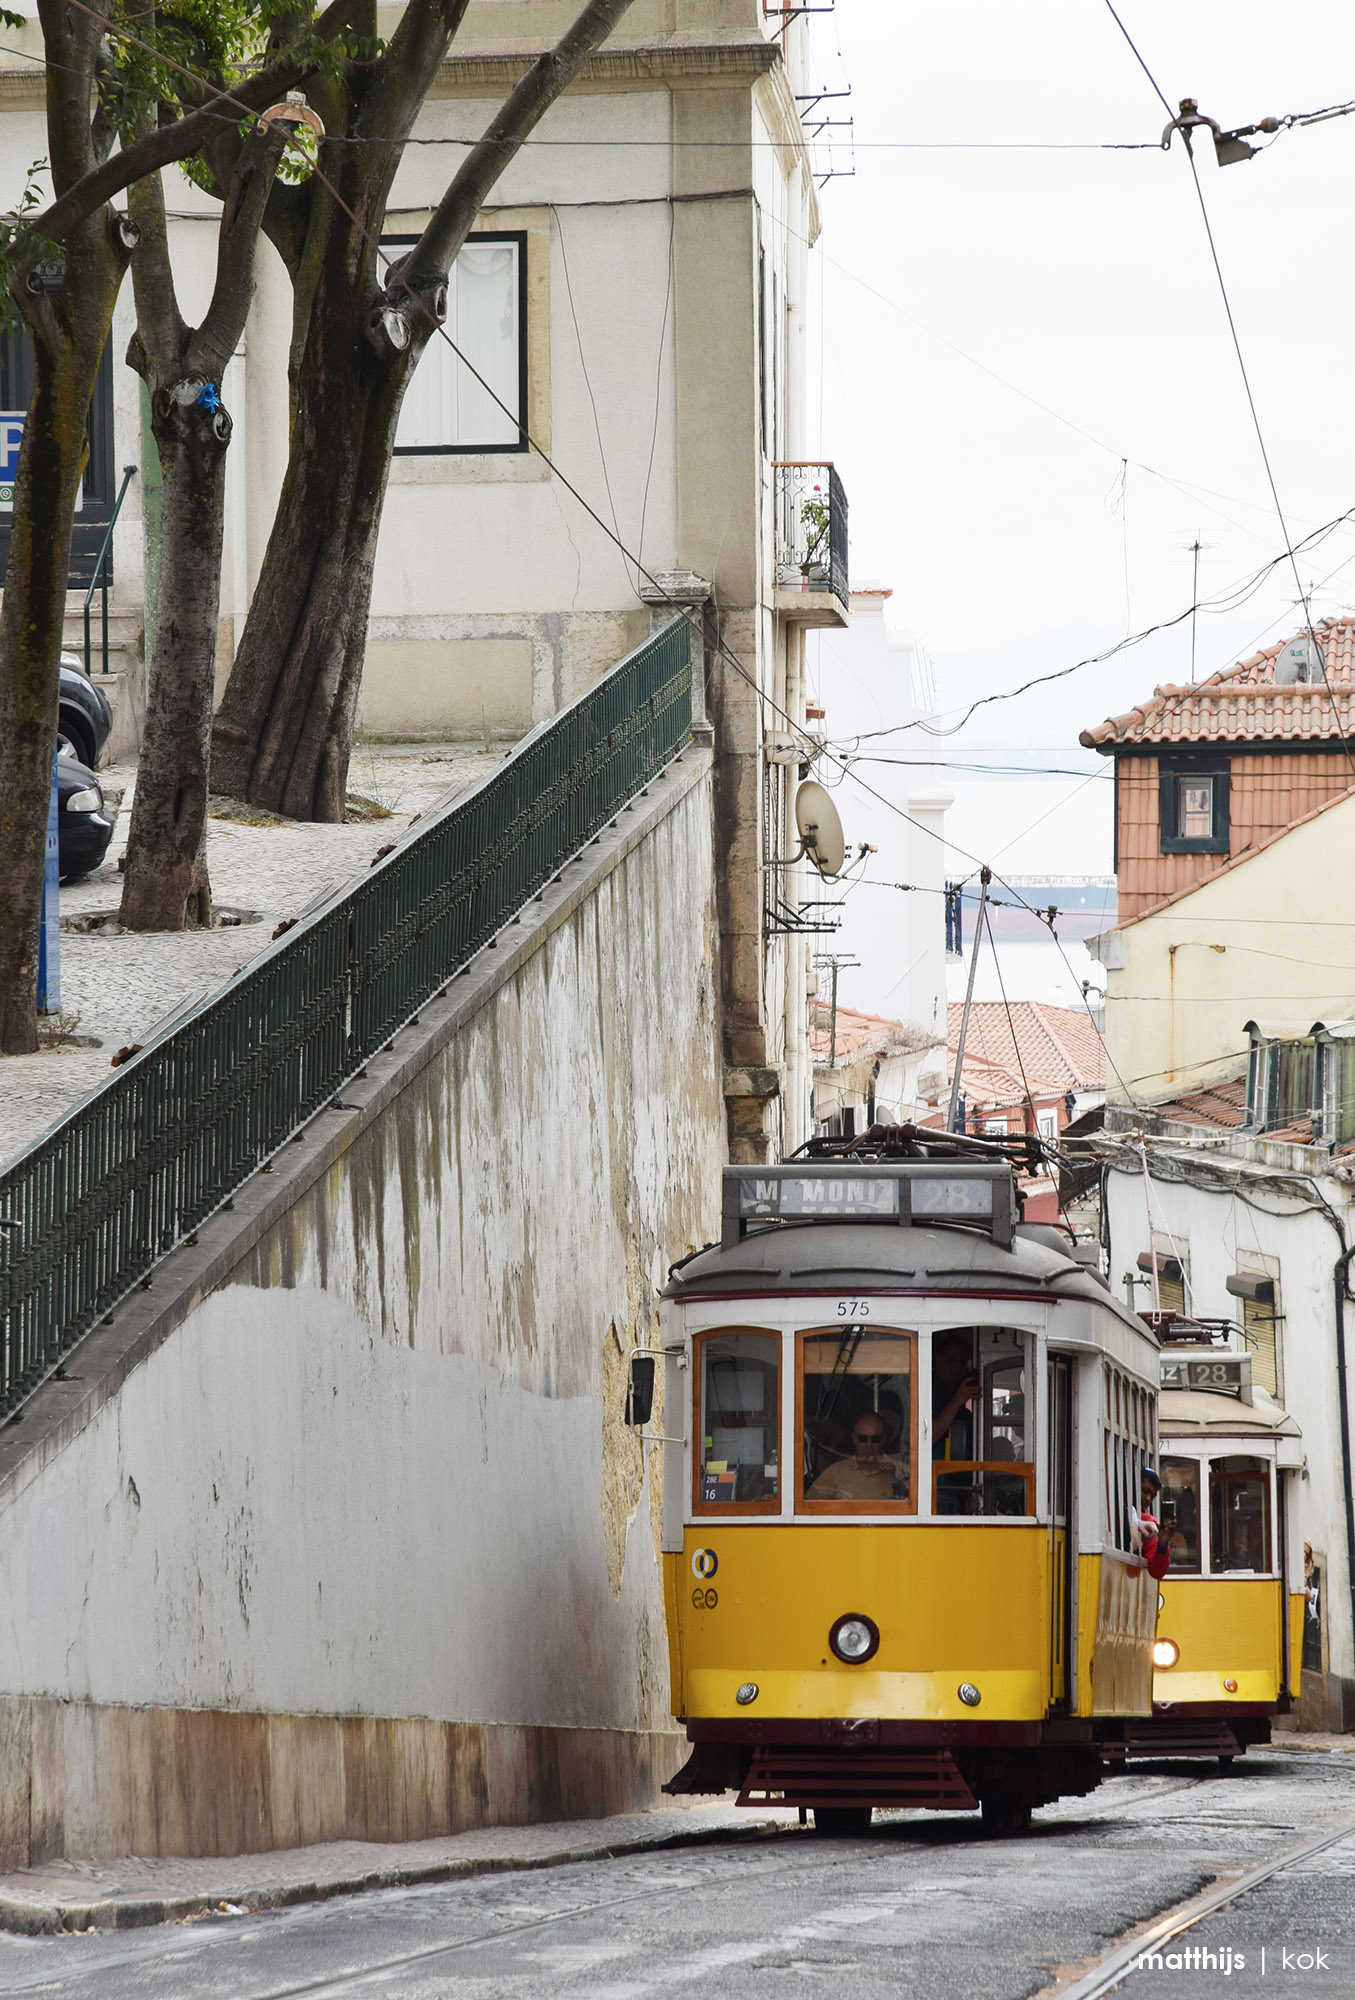 Tram 28, Lisbon, Portugal | Photo by Matthijs Kok